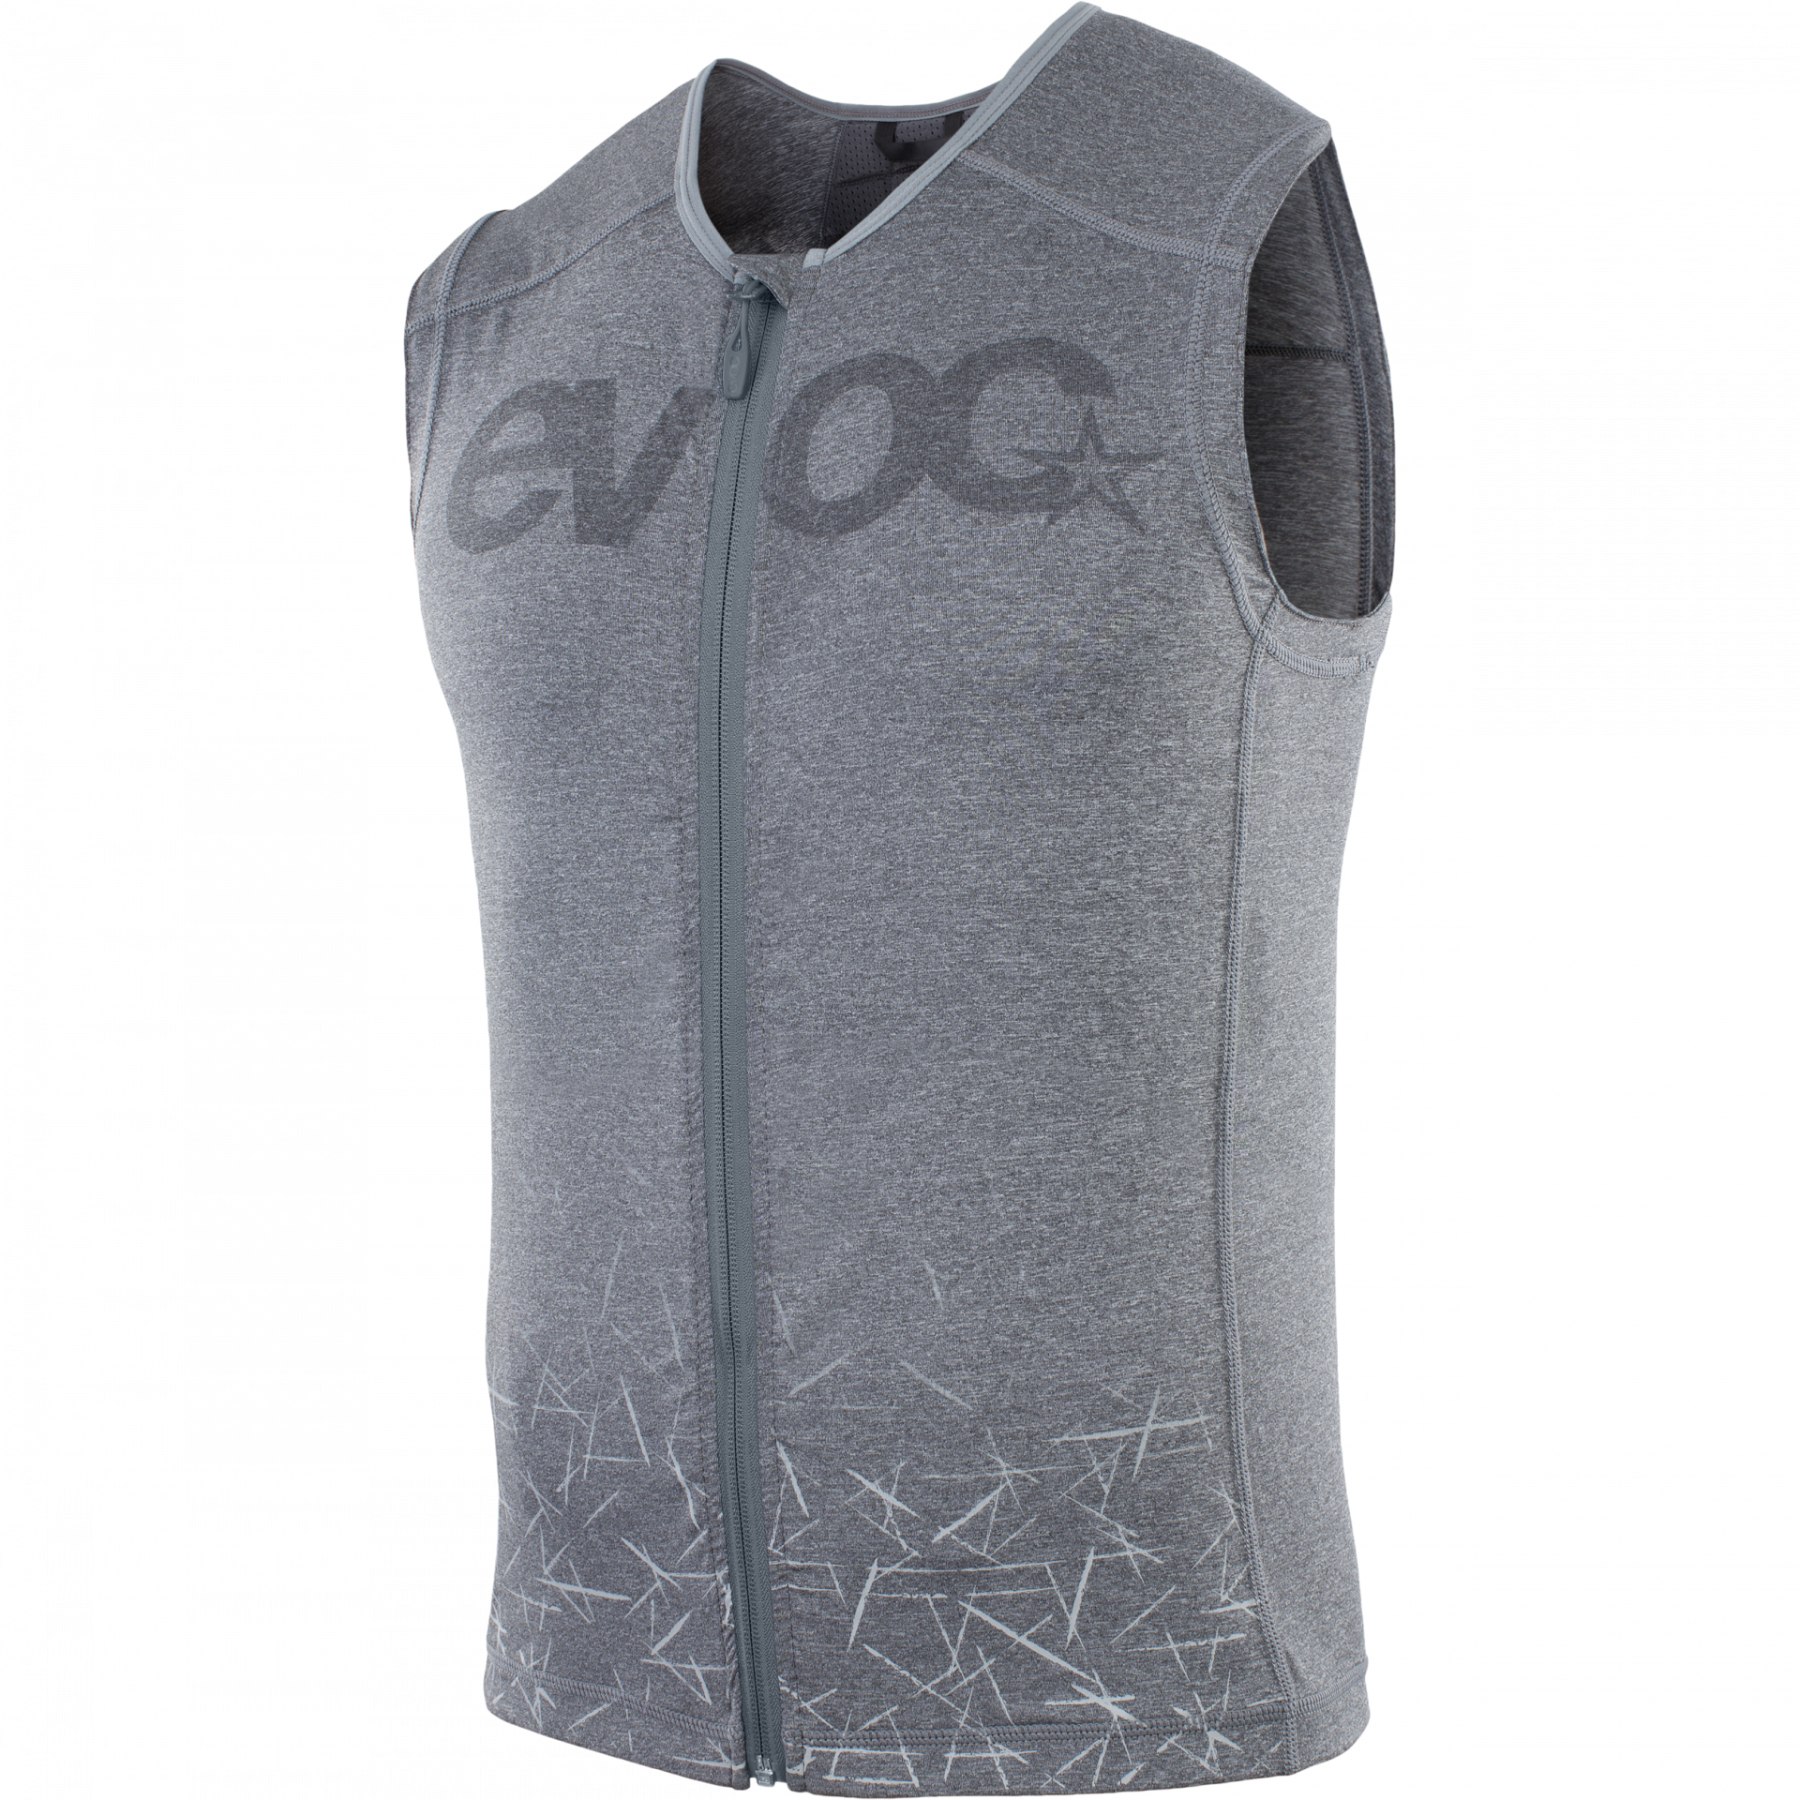 Foto de EVOC Protector Vest Chaleco para hombre - Carbon Grey